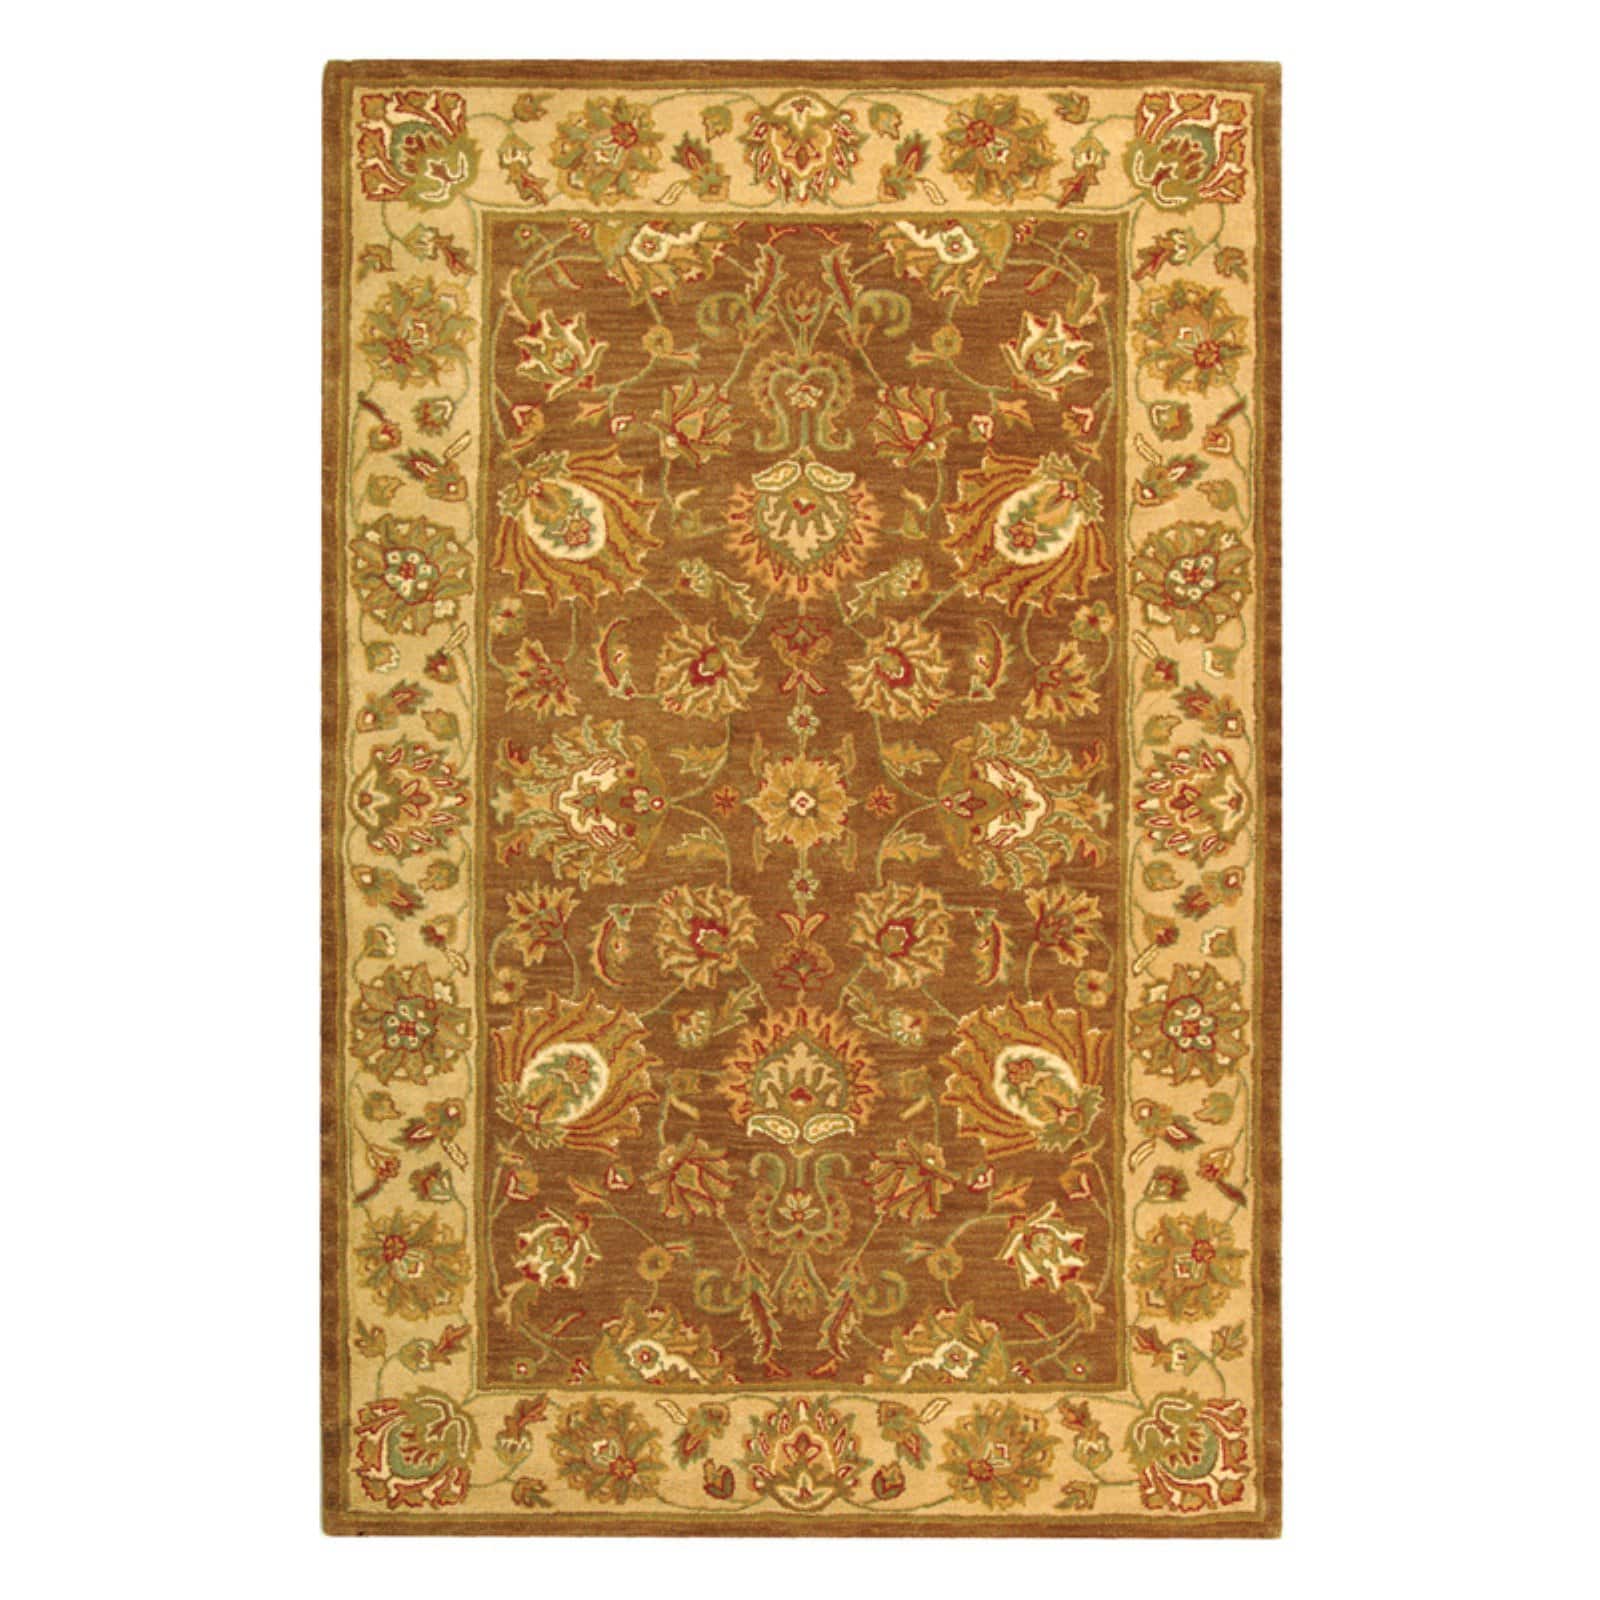 SAFAVIEH Heritage Regis Traditional Wool Area Rug, Brown/Ivory, 3'6" x 3'6" Round - image 4 of 9